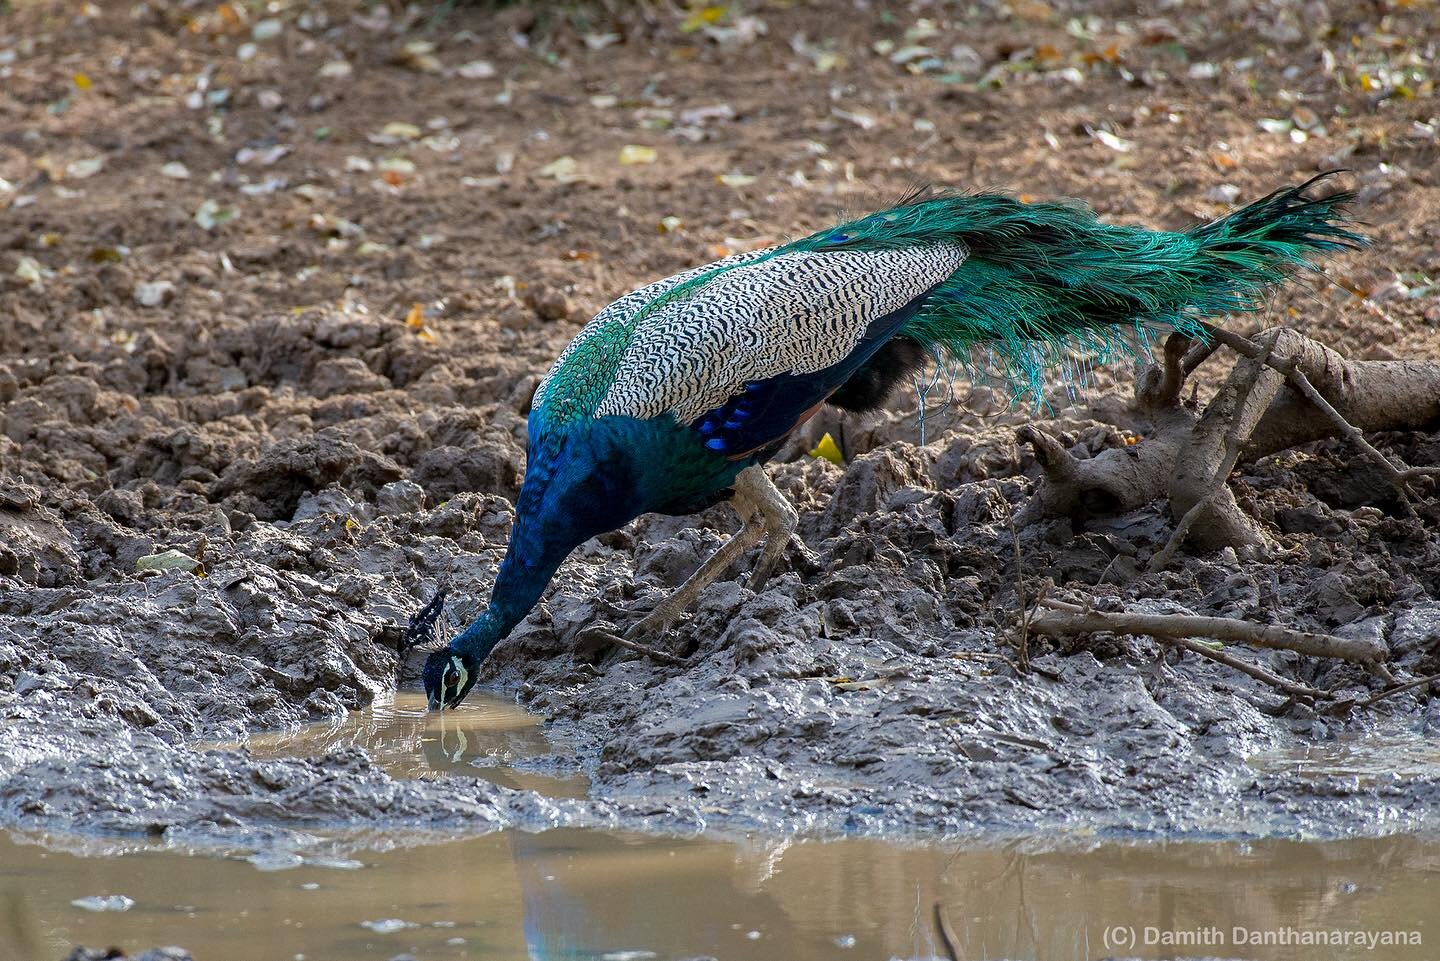 I took this photo of a Peacock quenching its thirst during the dry season at Yala National Park, Sri Lanka.

#peacock #peafowl #srilanka #srilankatravel #yala #yalanationalpark #bird #birdphotography #water #photography #wildlife #wildlifeonearth